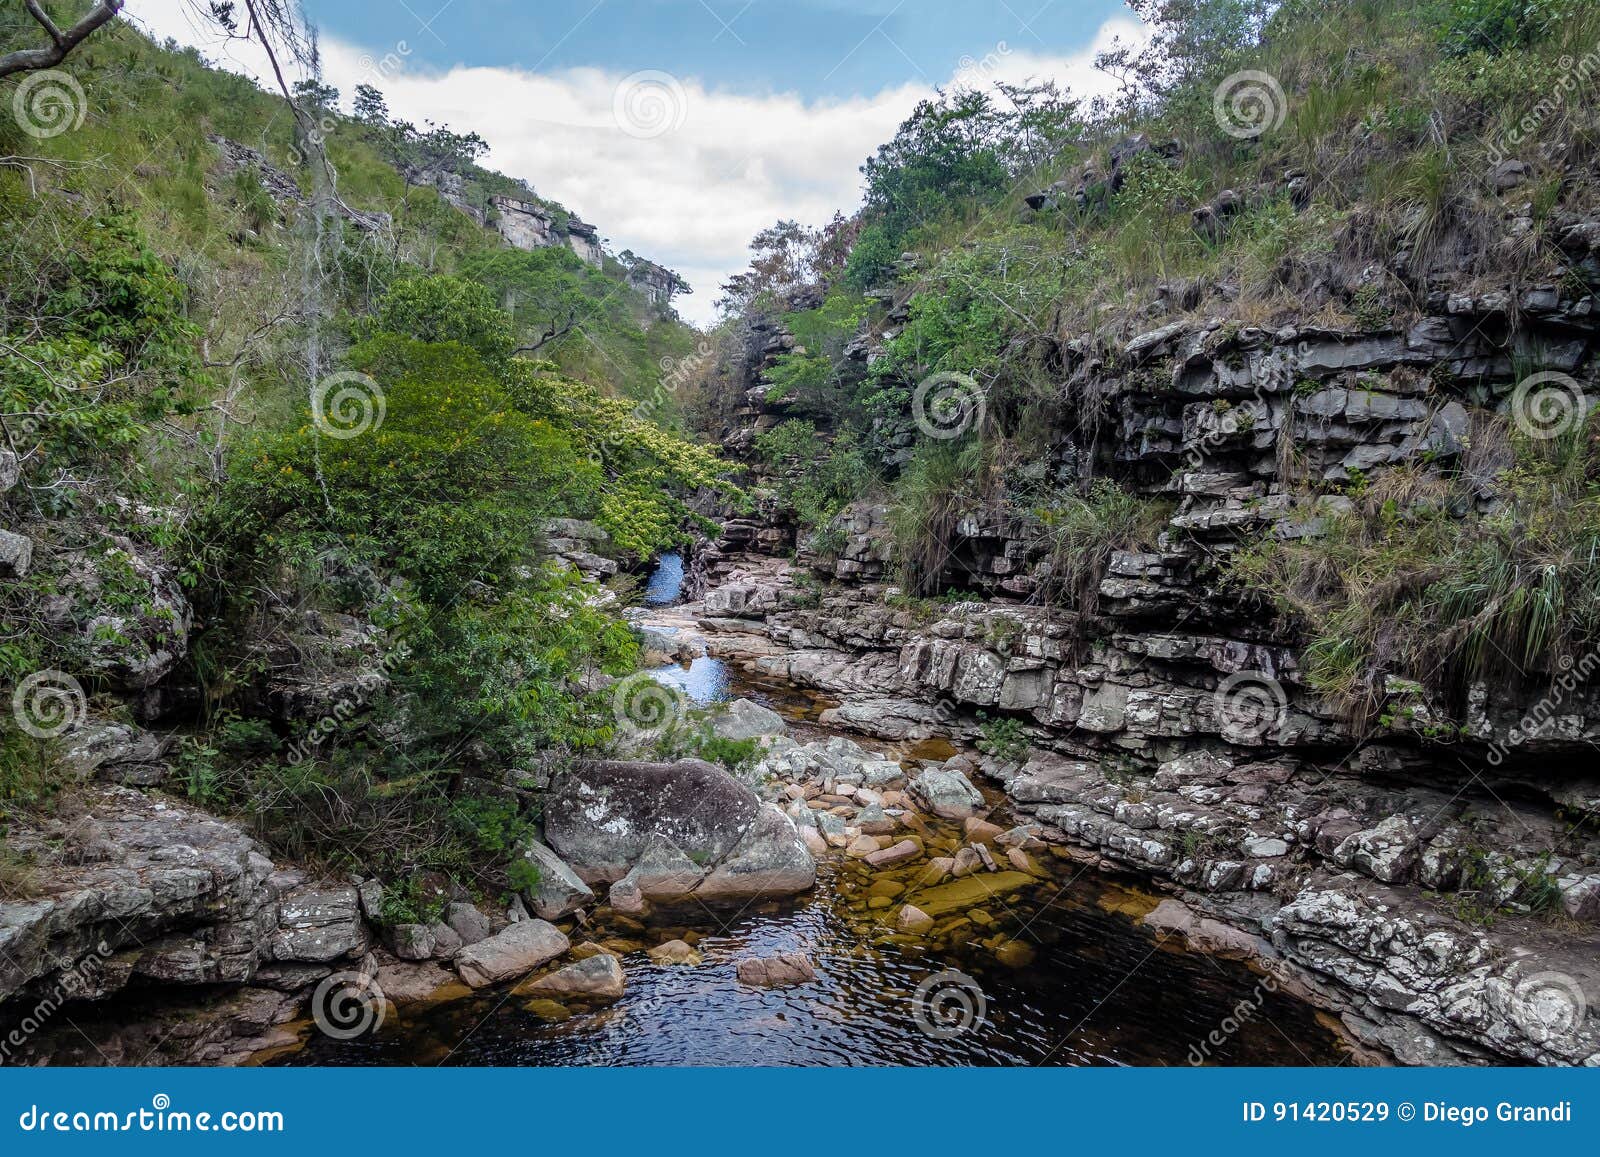 mucugezinho river in chapada diamantina - bahia, brazil